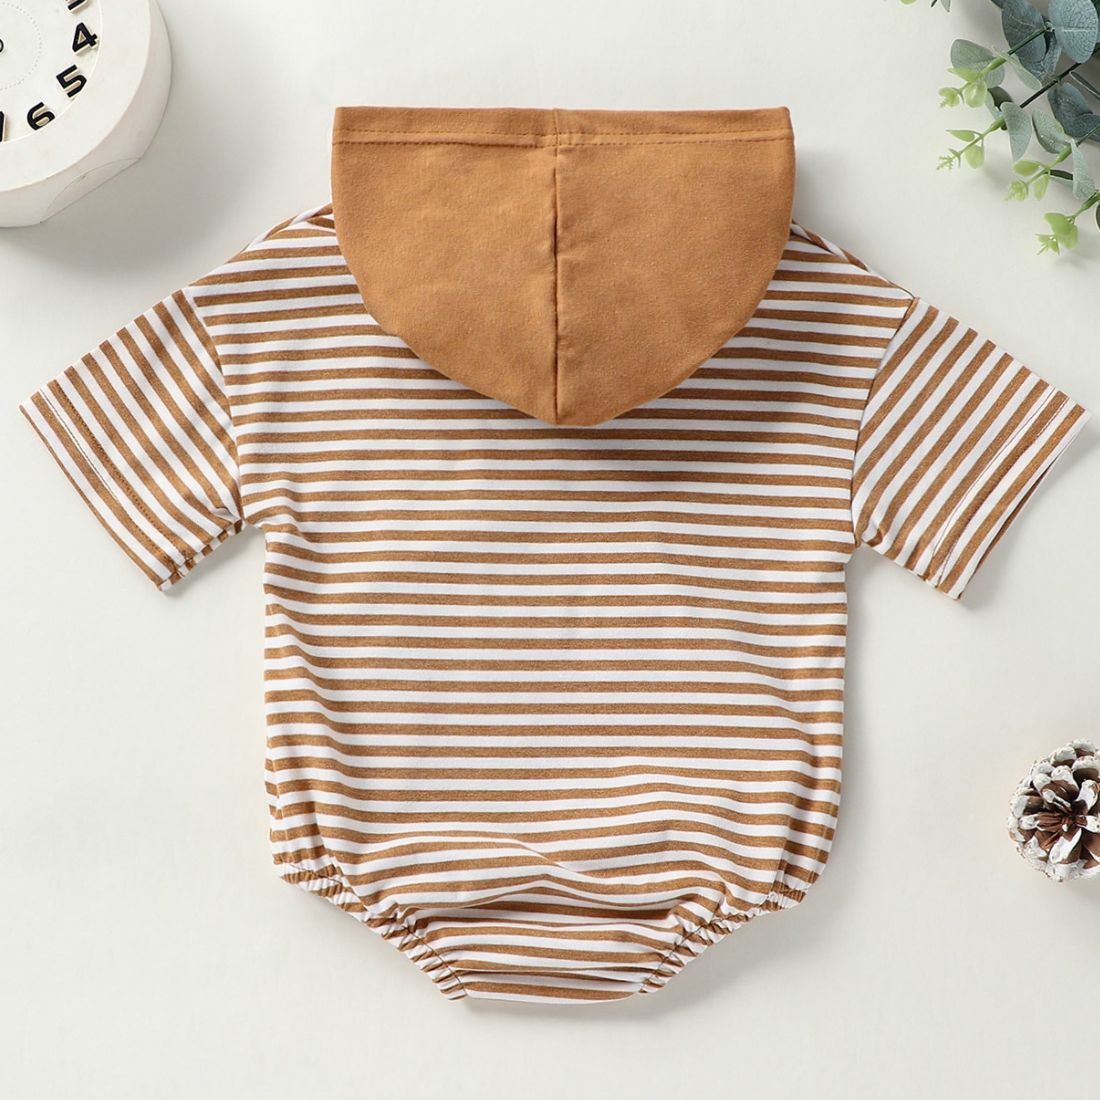 Stripe Hooded Baby Boy Bodysuit